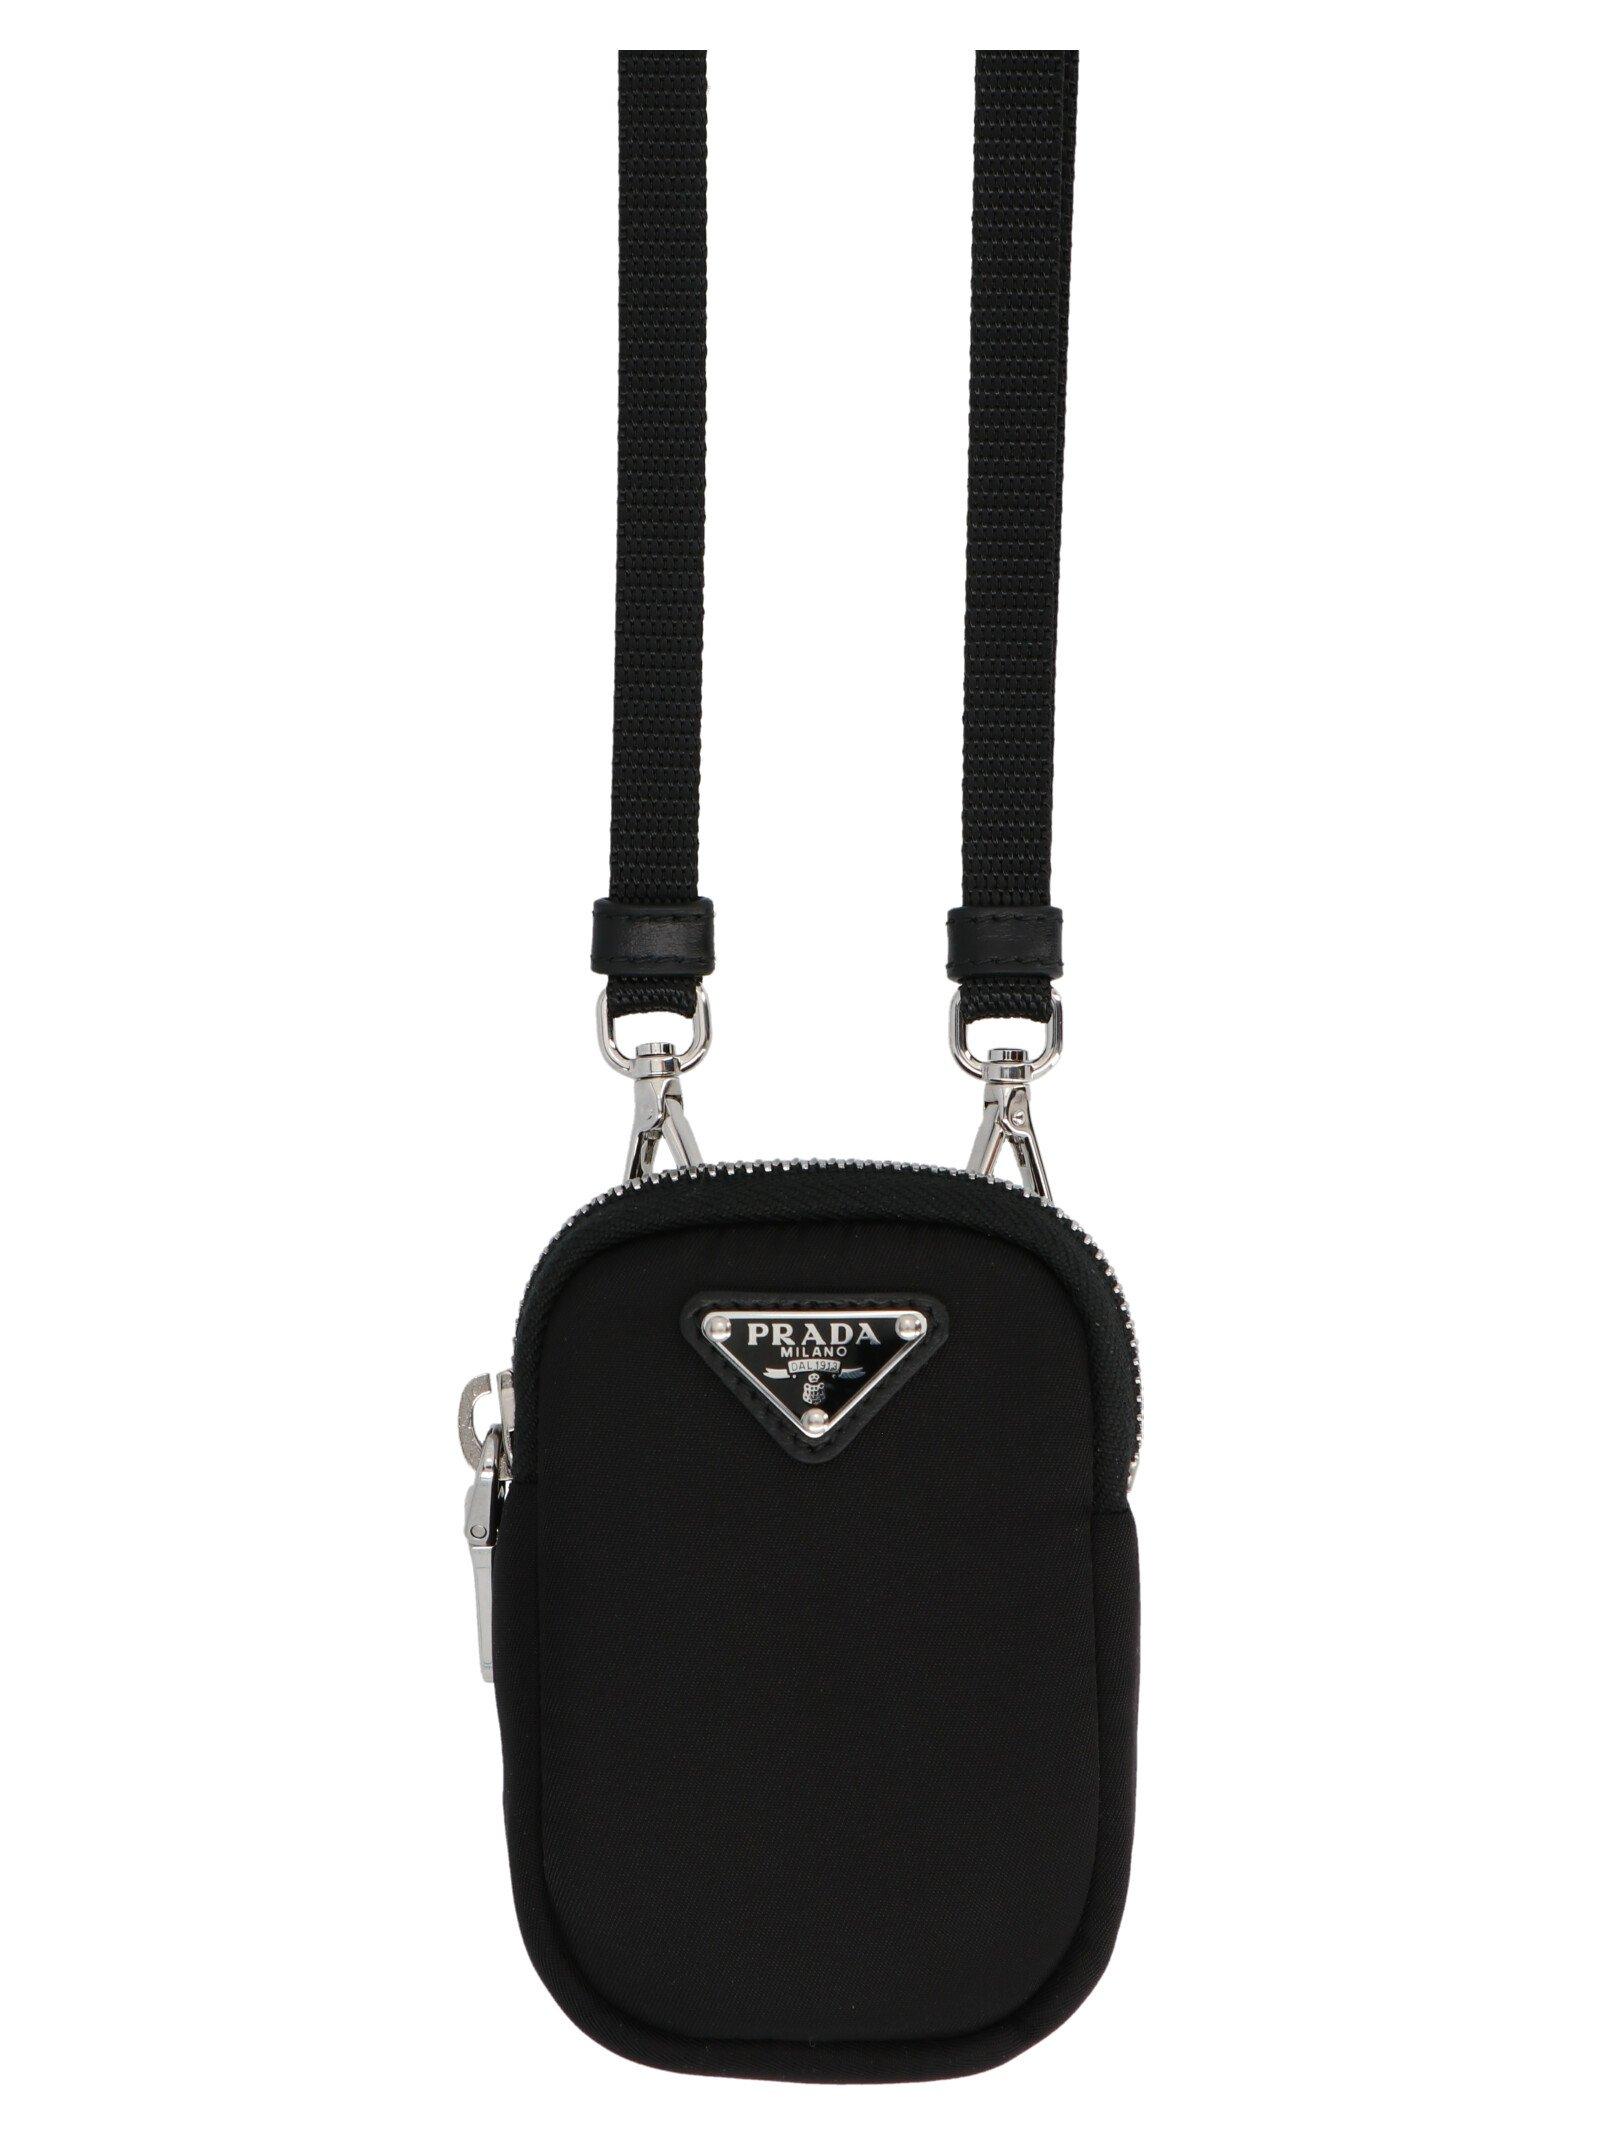 Prada Synthetic Logo Mini Crossbody Bag in Black - Lyst